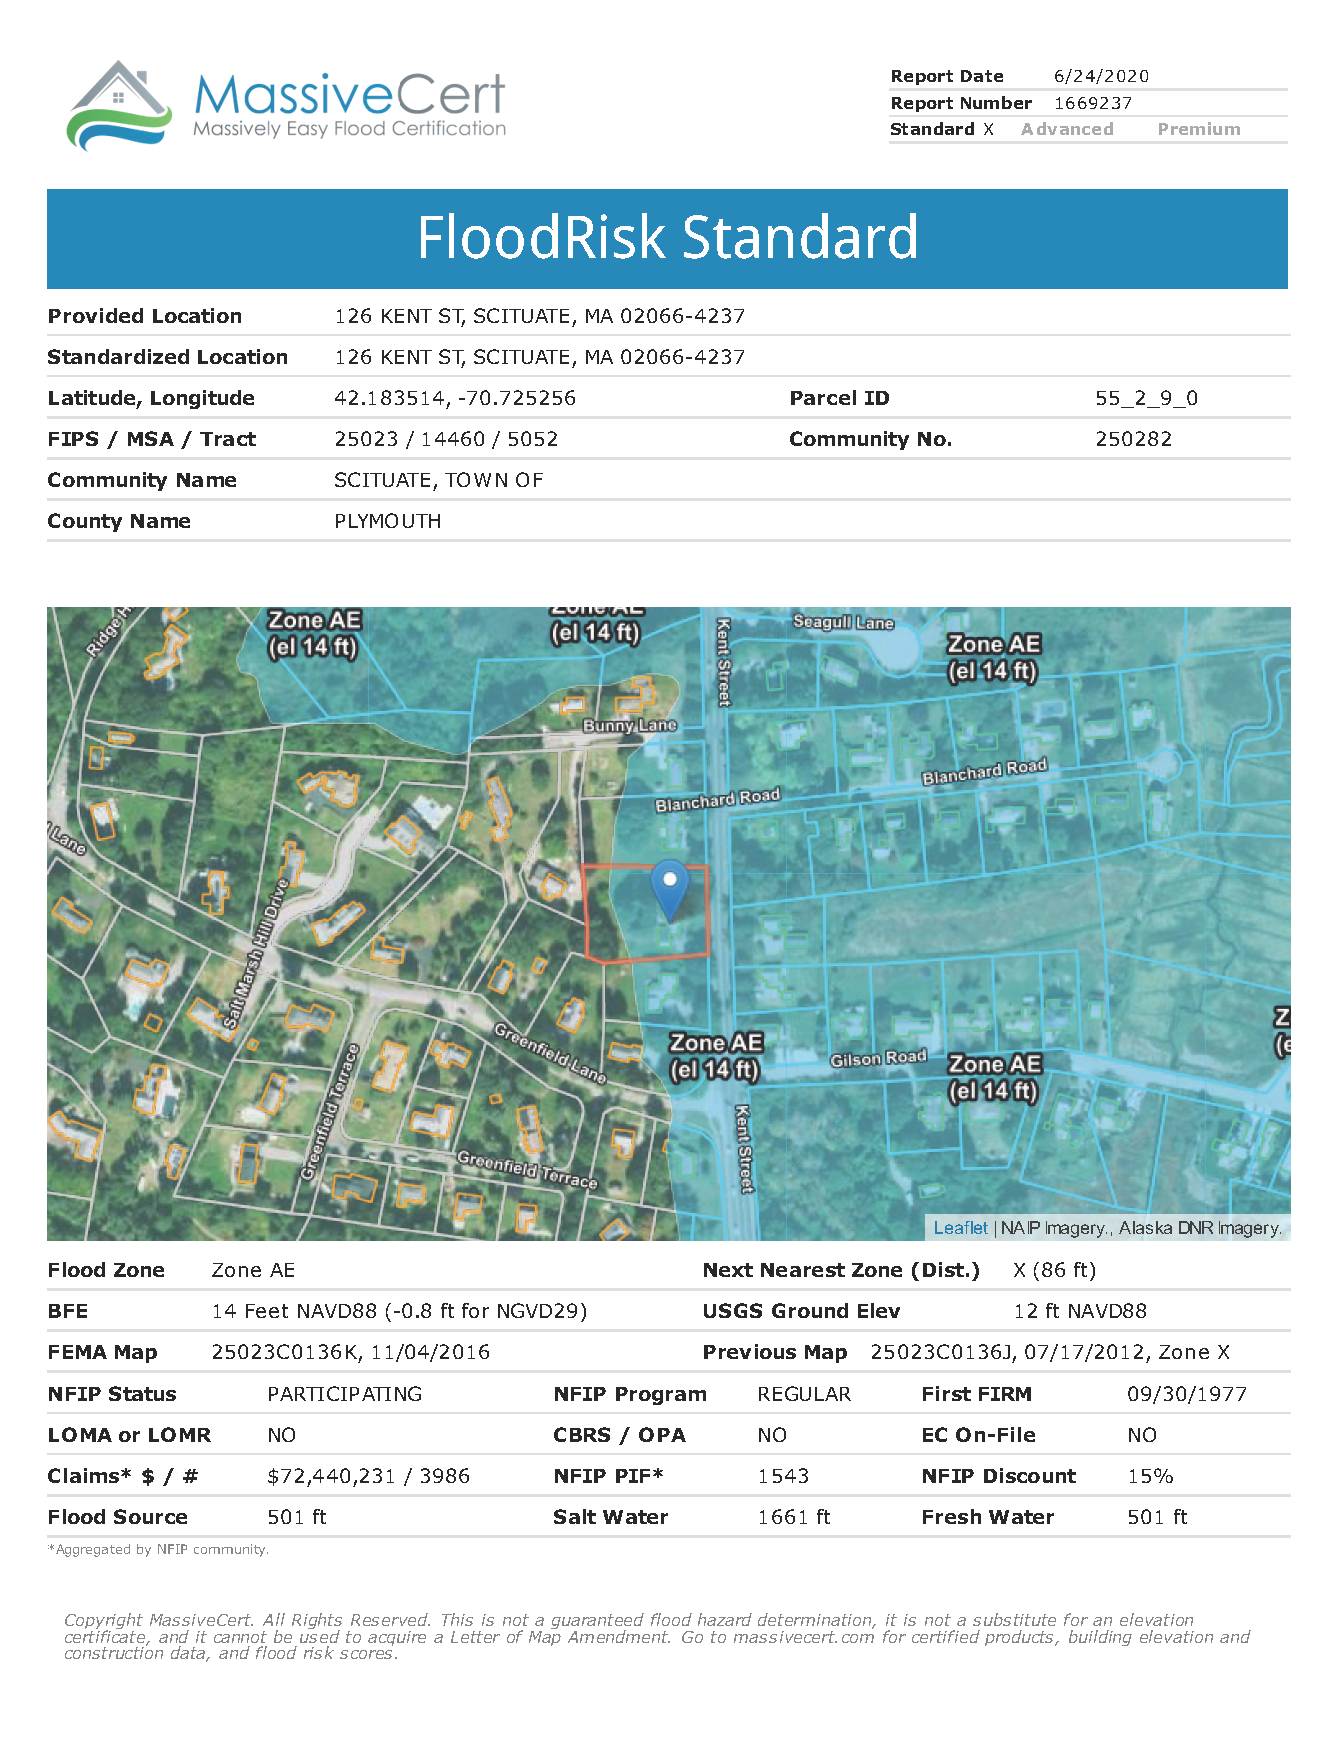 Flood Risk Standard example report